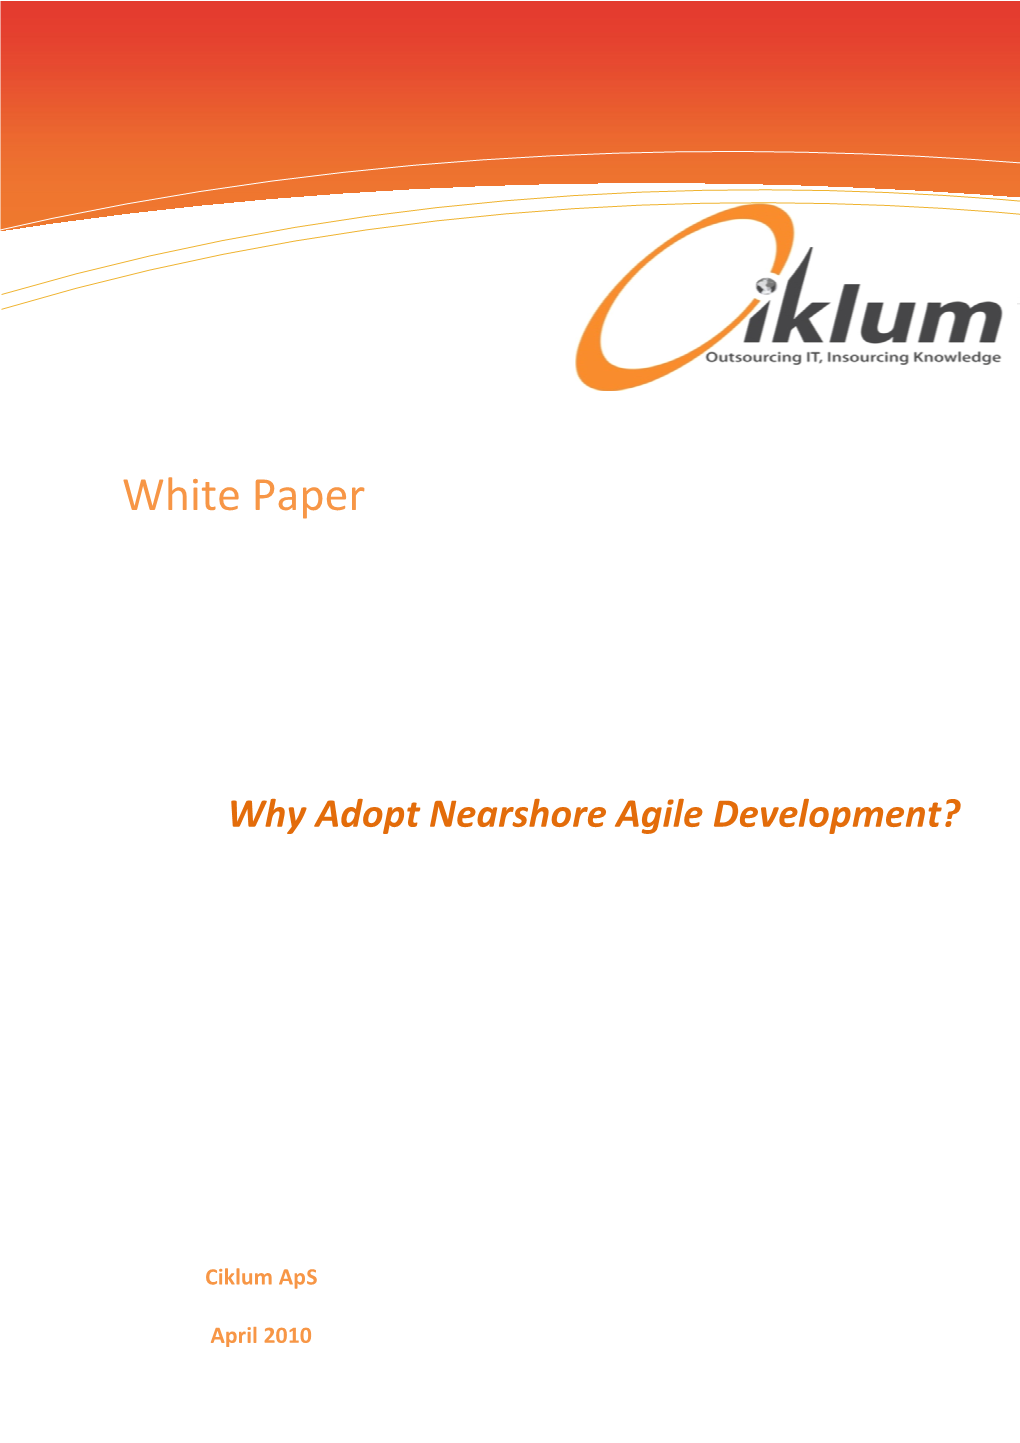 Why Adopt Nearshore Agile Development? by Ciklum. April 2010